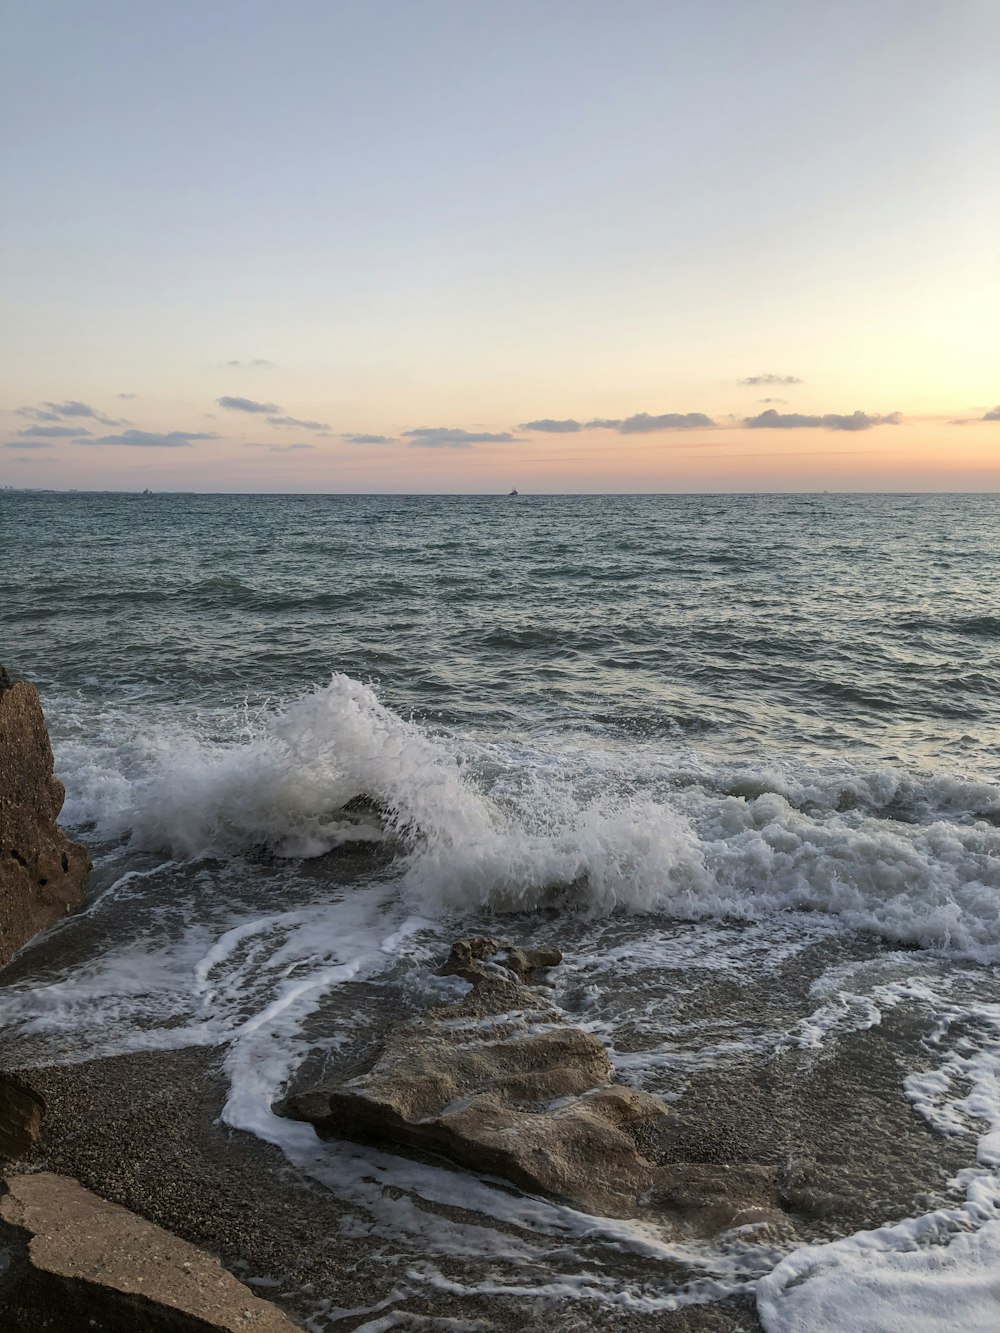 ocean waves crashing on brown rocky shore during sunset